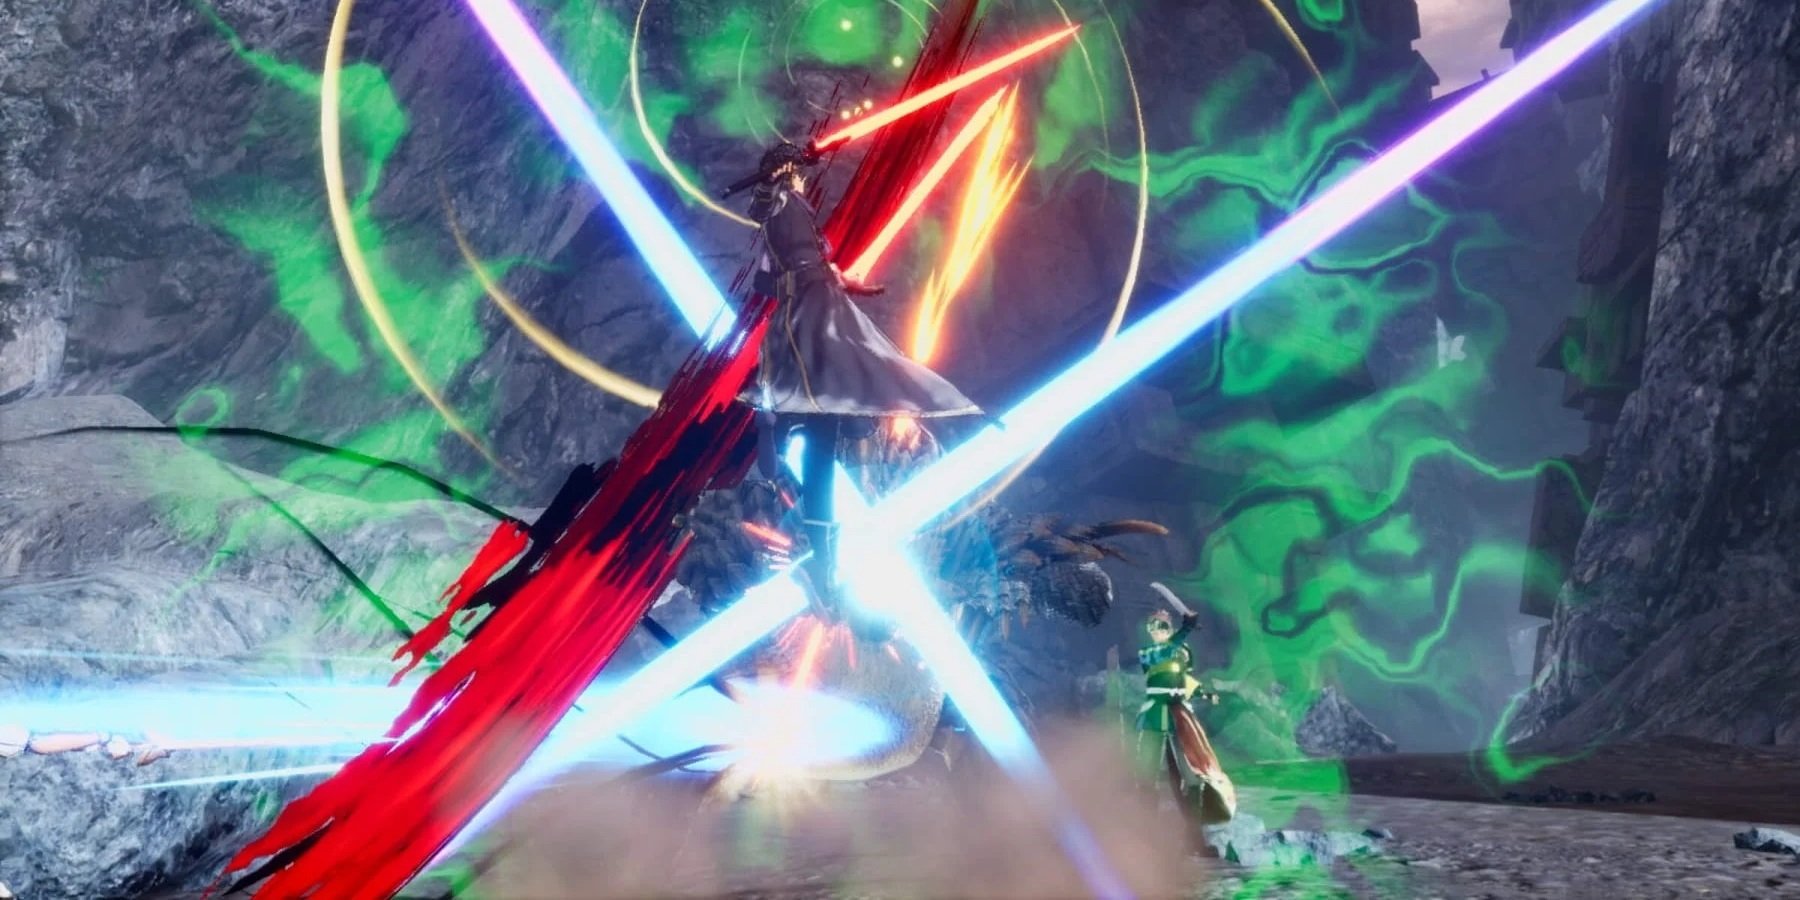 Sword Art Online: Last Recollection DLC 'Ritual of Bonds' first